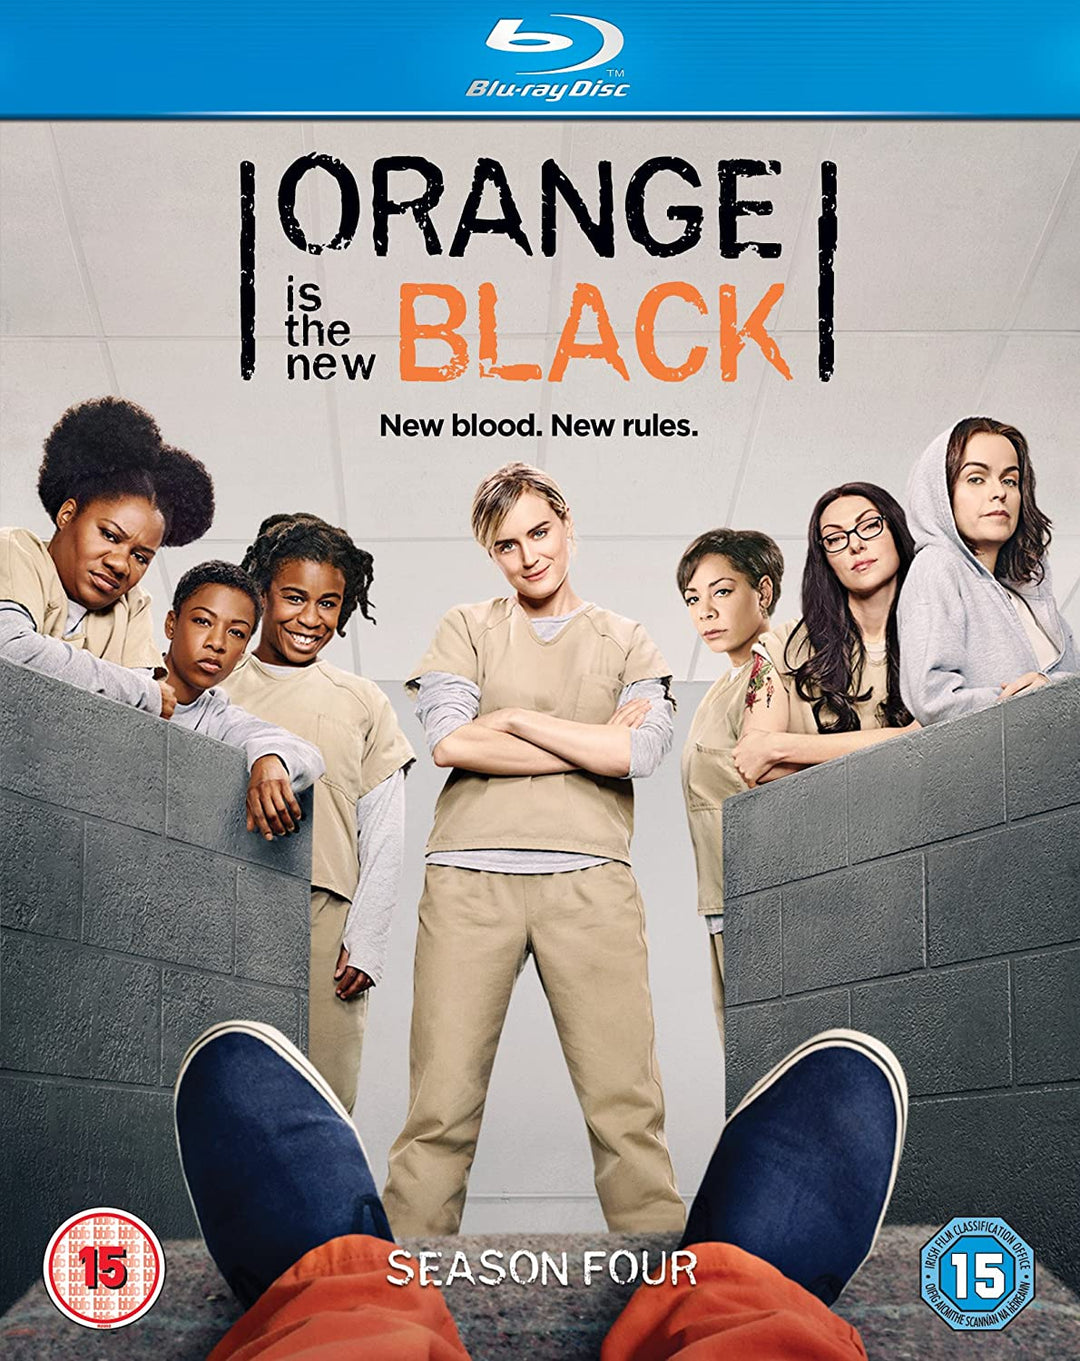 Orange is the New Black Season 4 - Drama [Blu-ray]